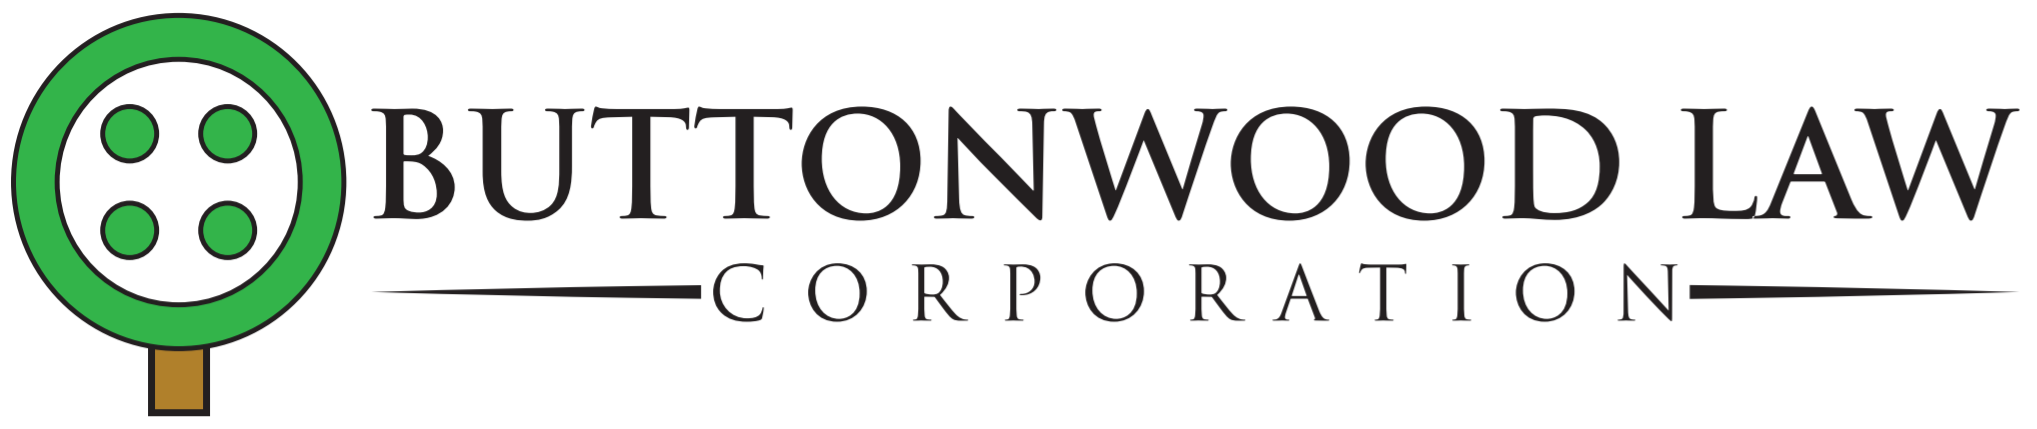 Buttonwood Law Corporation